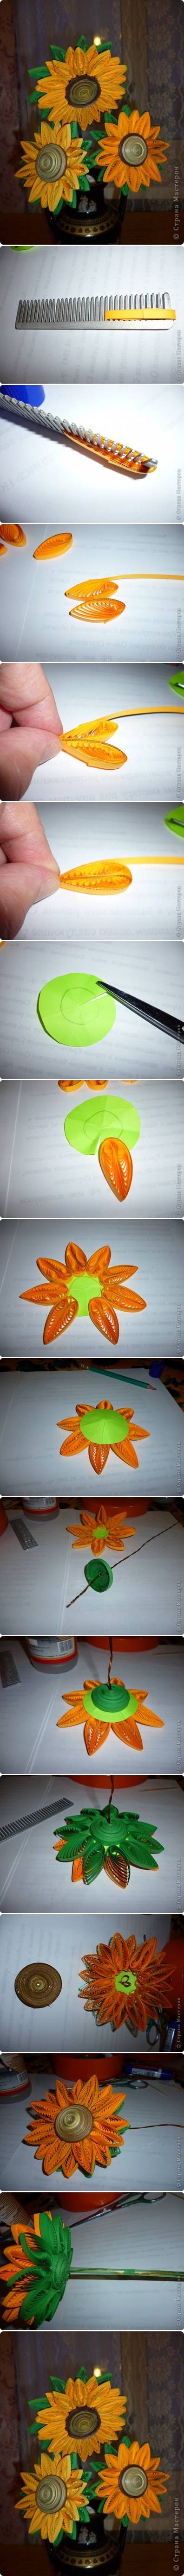 DIY-Quilling-Sunflower.jpg